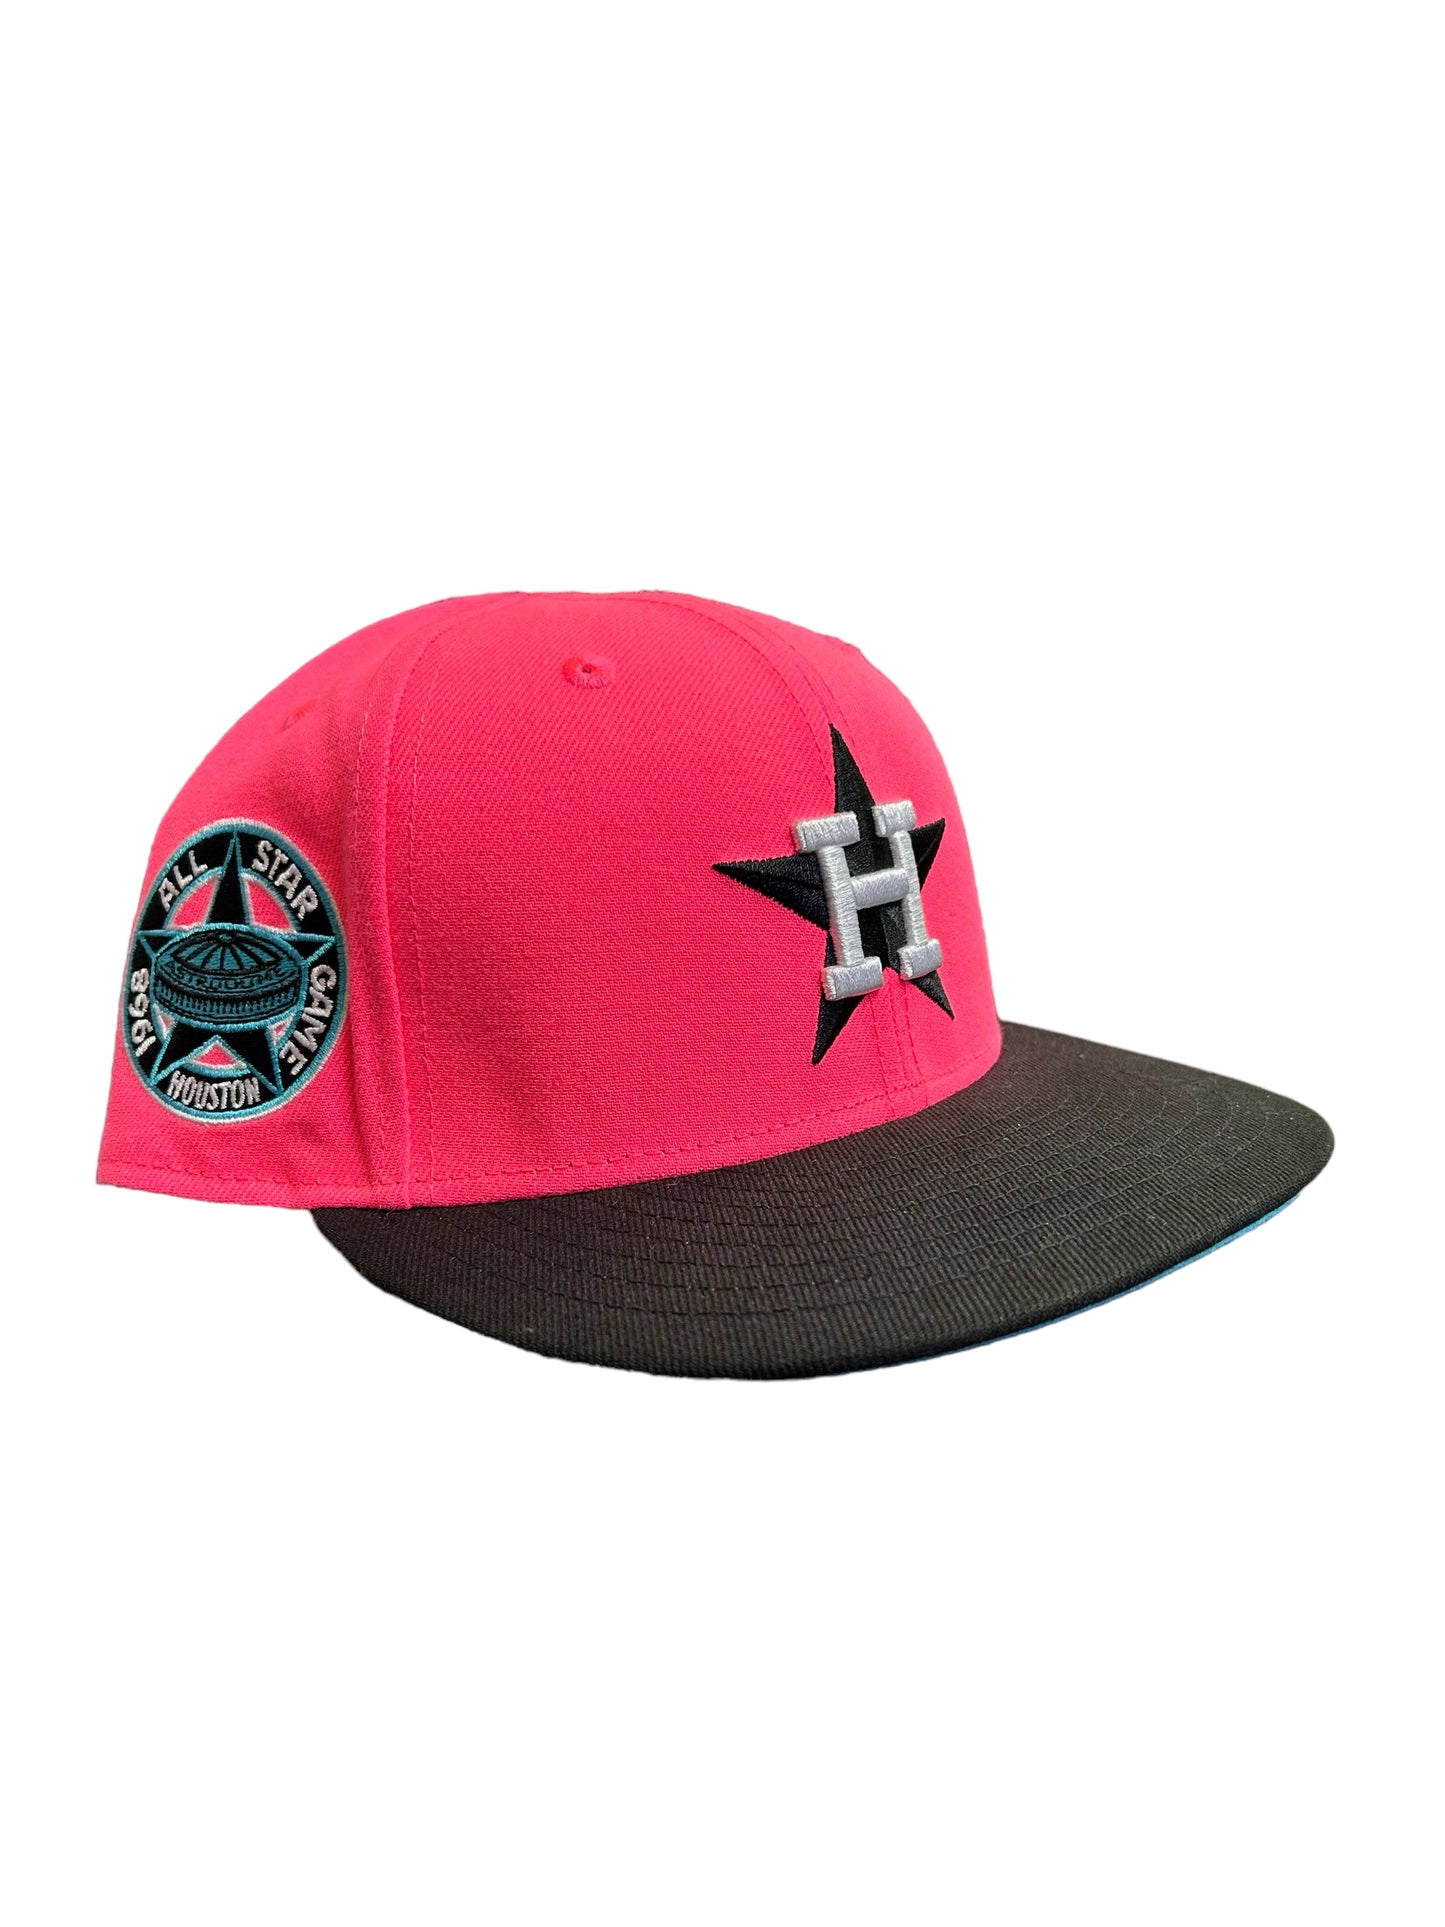 Houston Astros Hot Pink Hat